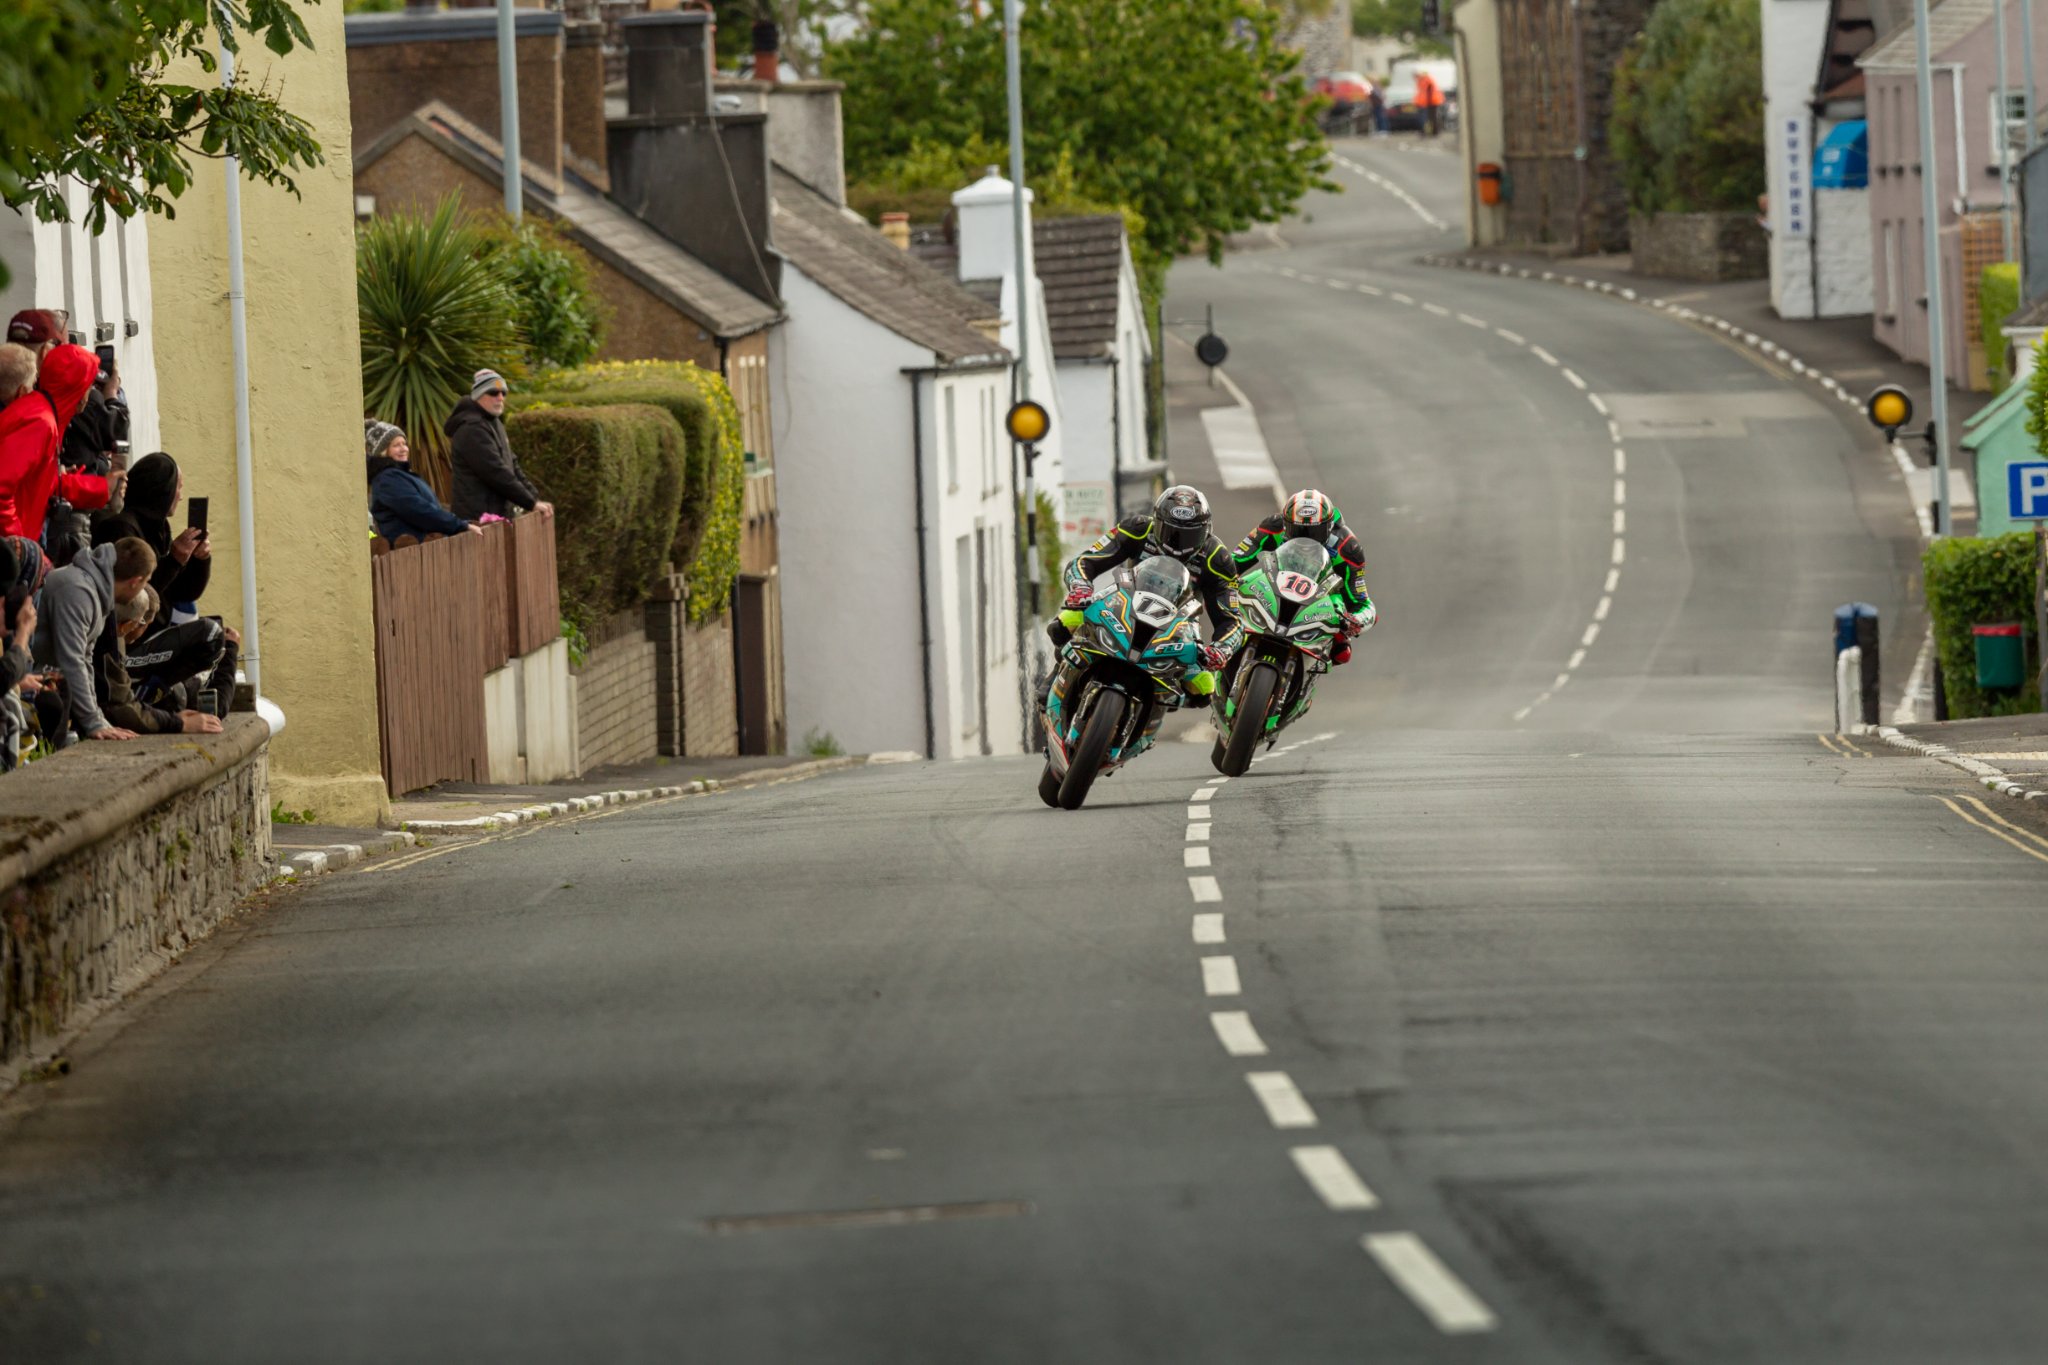 A mais perigosa corrida de motos do mundo:(Isle Of Man TT- 2012